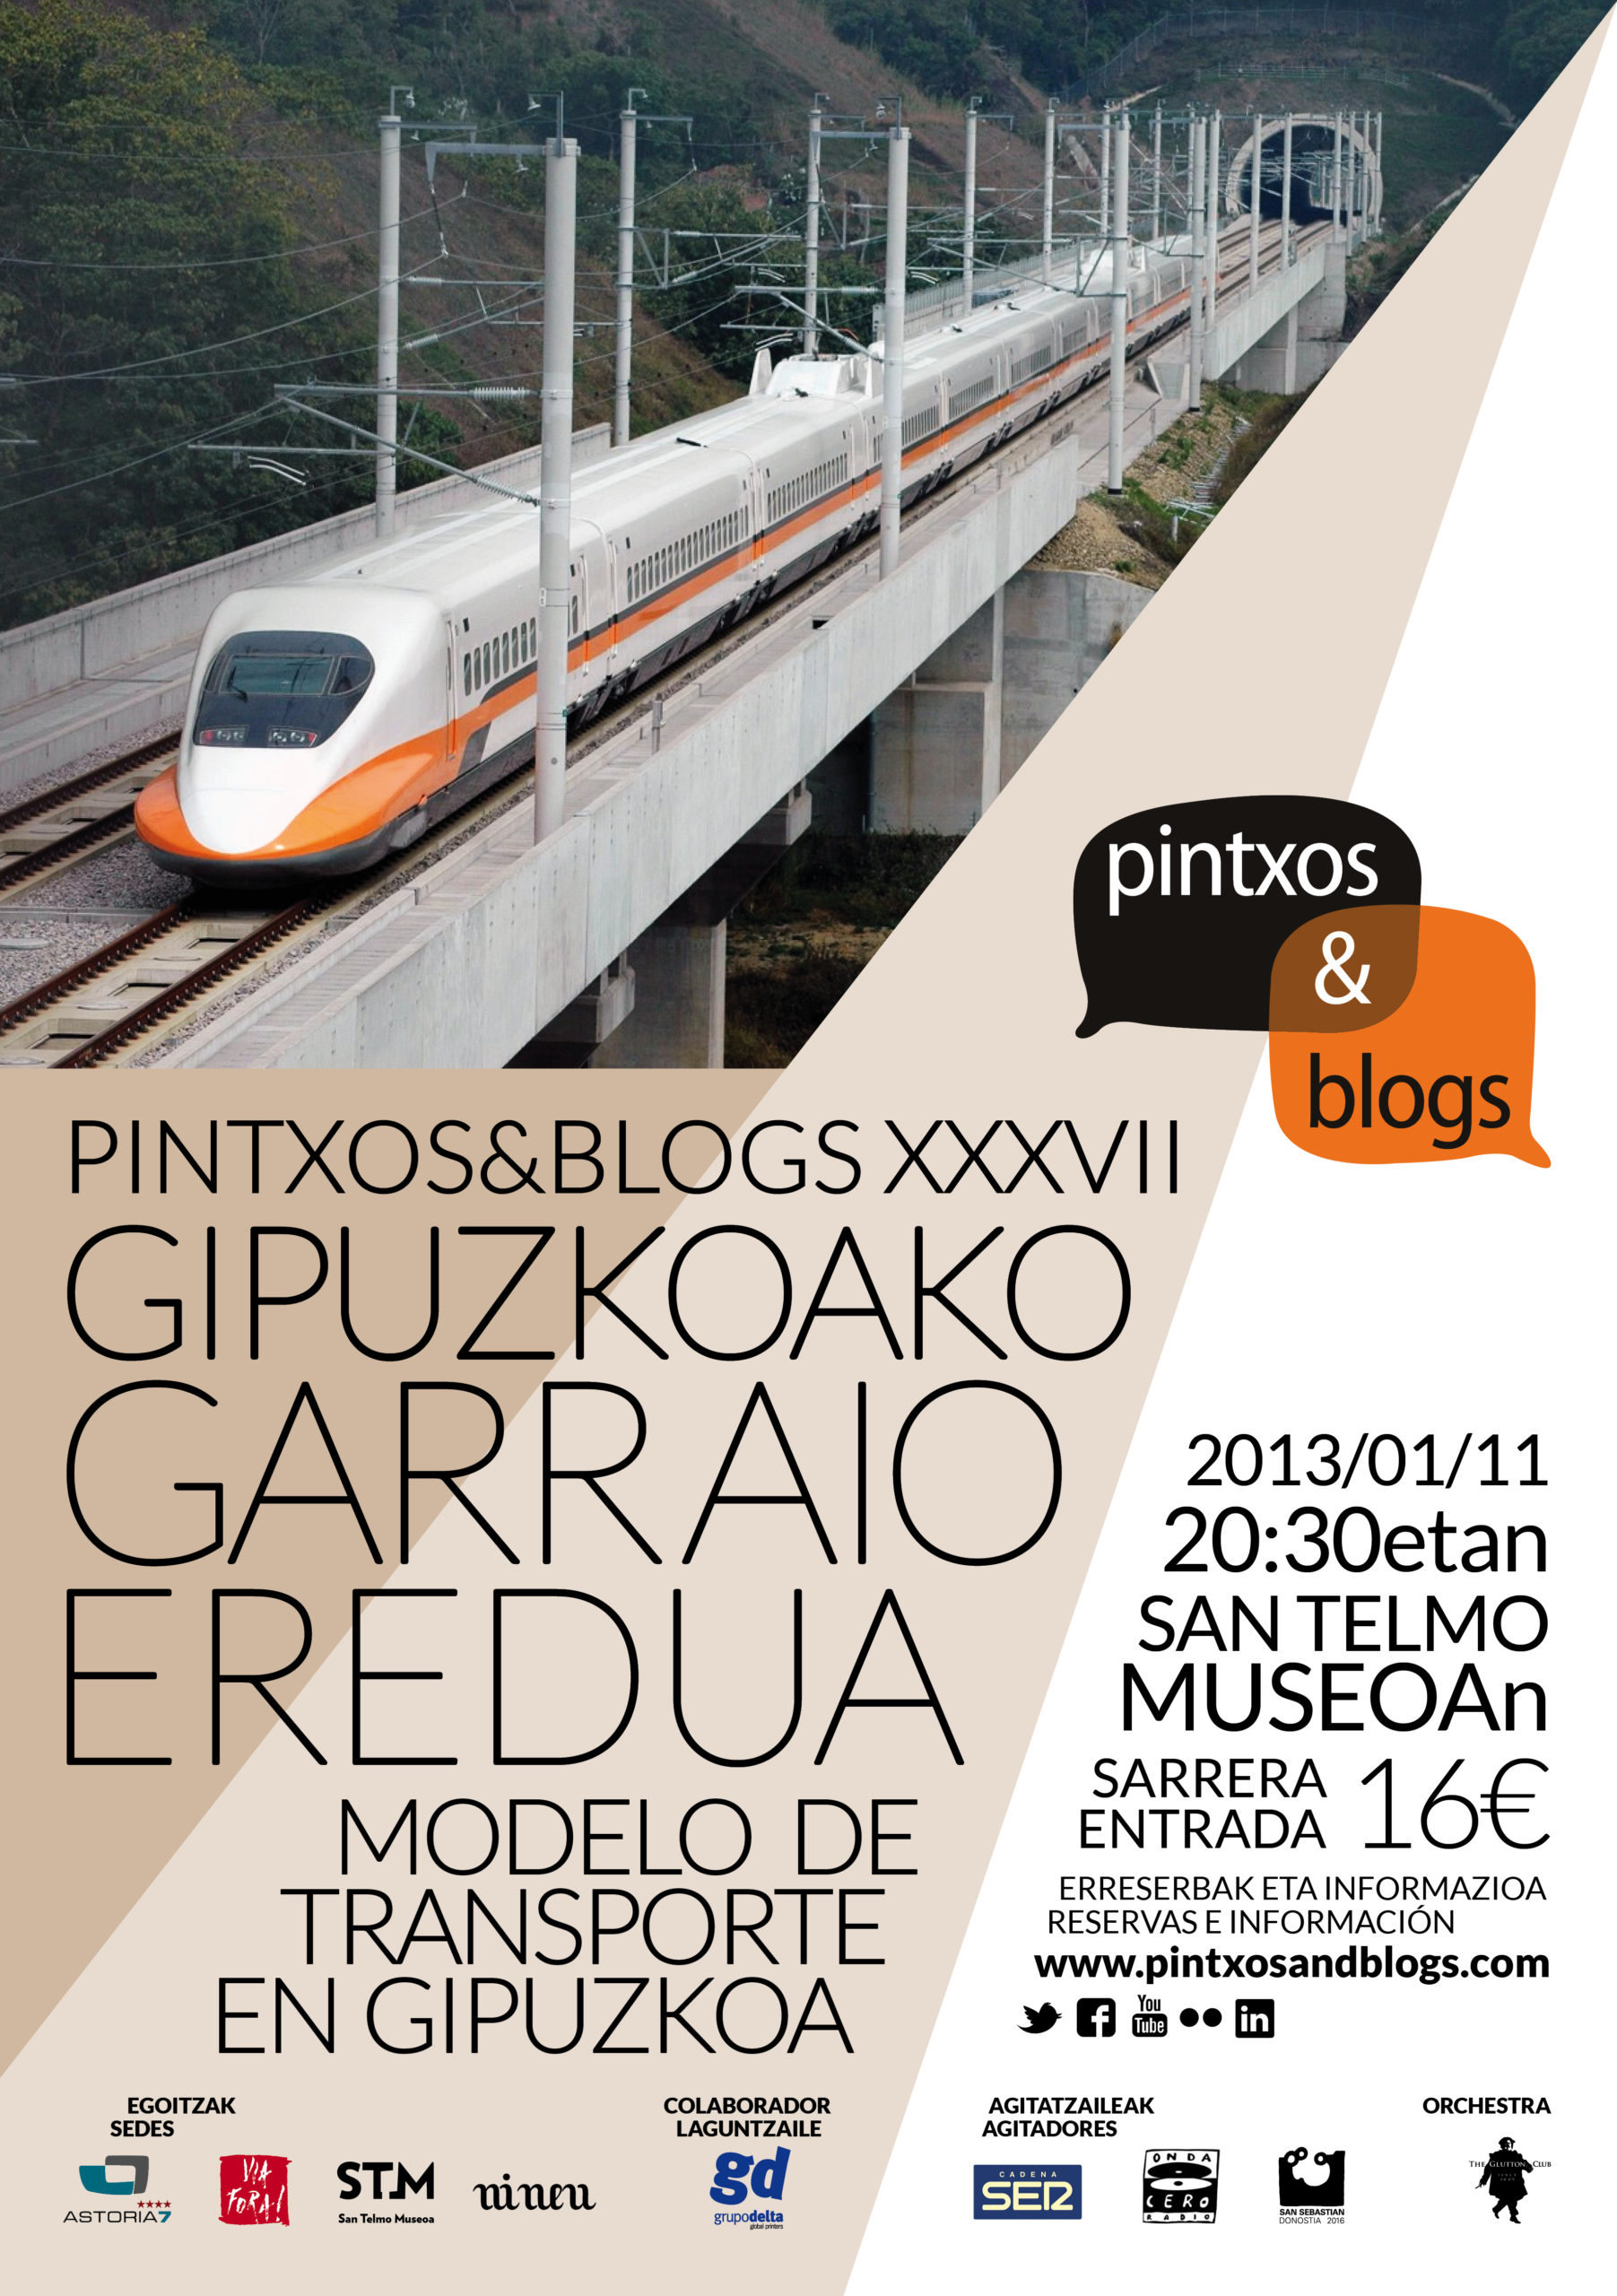 Pintxos&Blogs XXXVII. Gipuzkoako garraio eredua. 2013.01.11, San Telmo Museoa